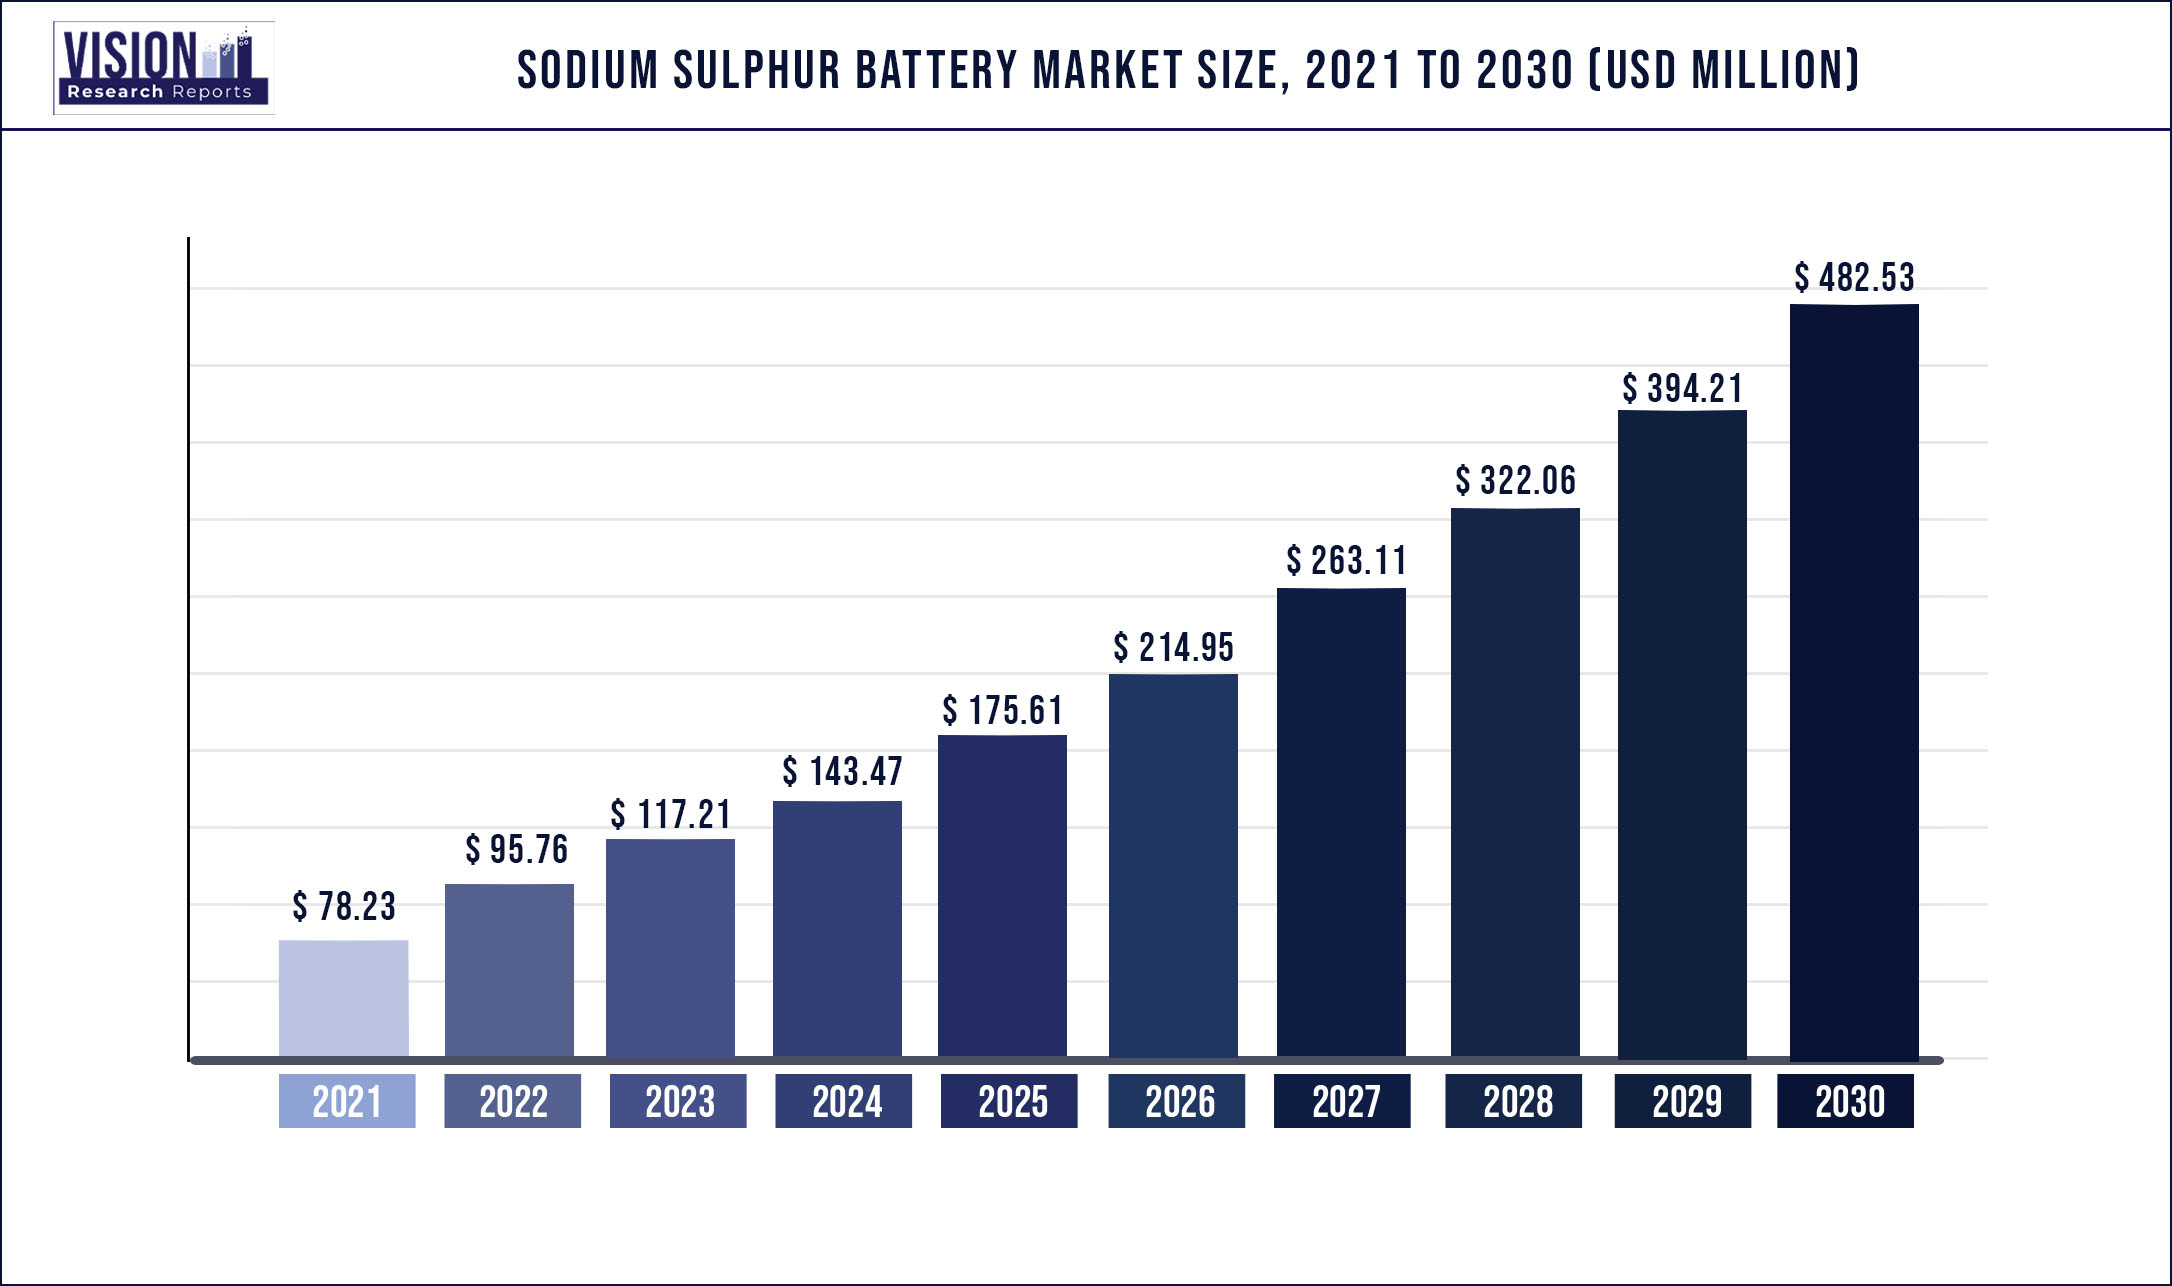 Sodium Sulphur Battery Market Size 2021 to 2030